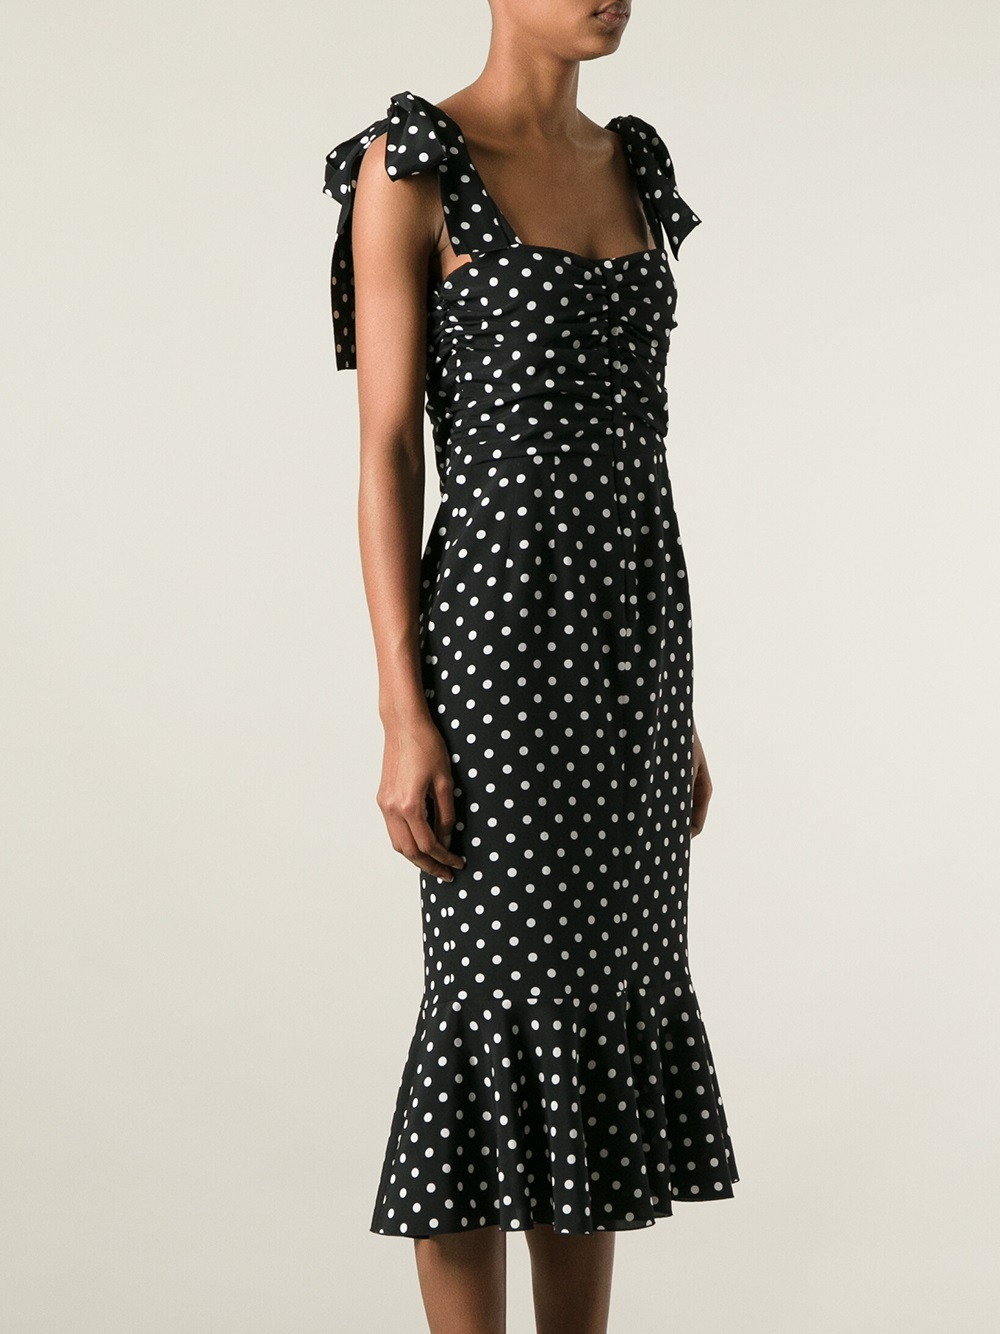 Dolce & Gabbana Polka Dot Dress in Black | Lyst